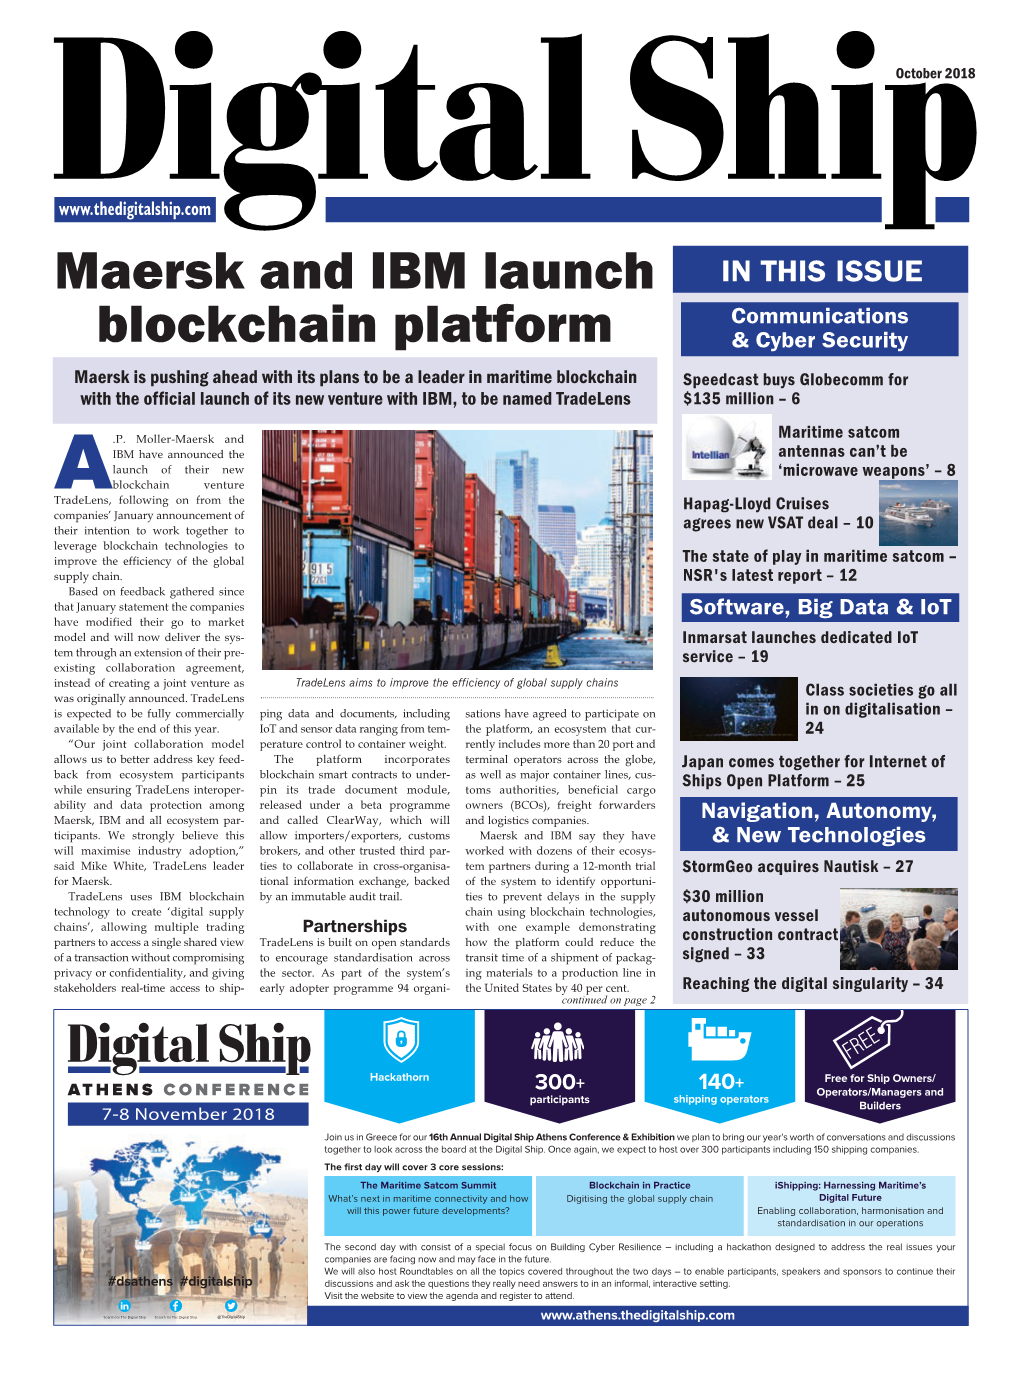 Maersk and IBM Launch Blockchain Platform